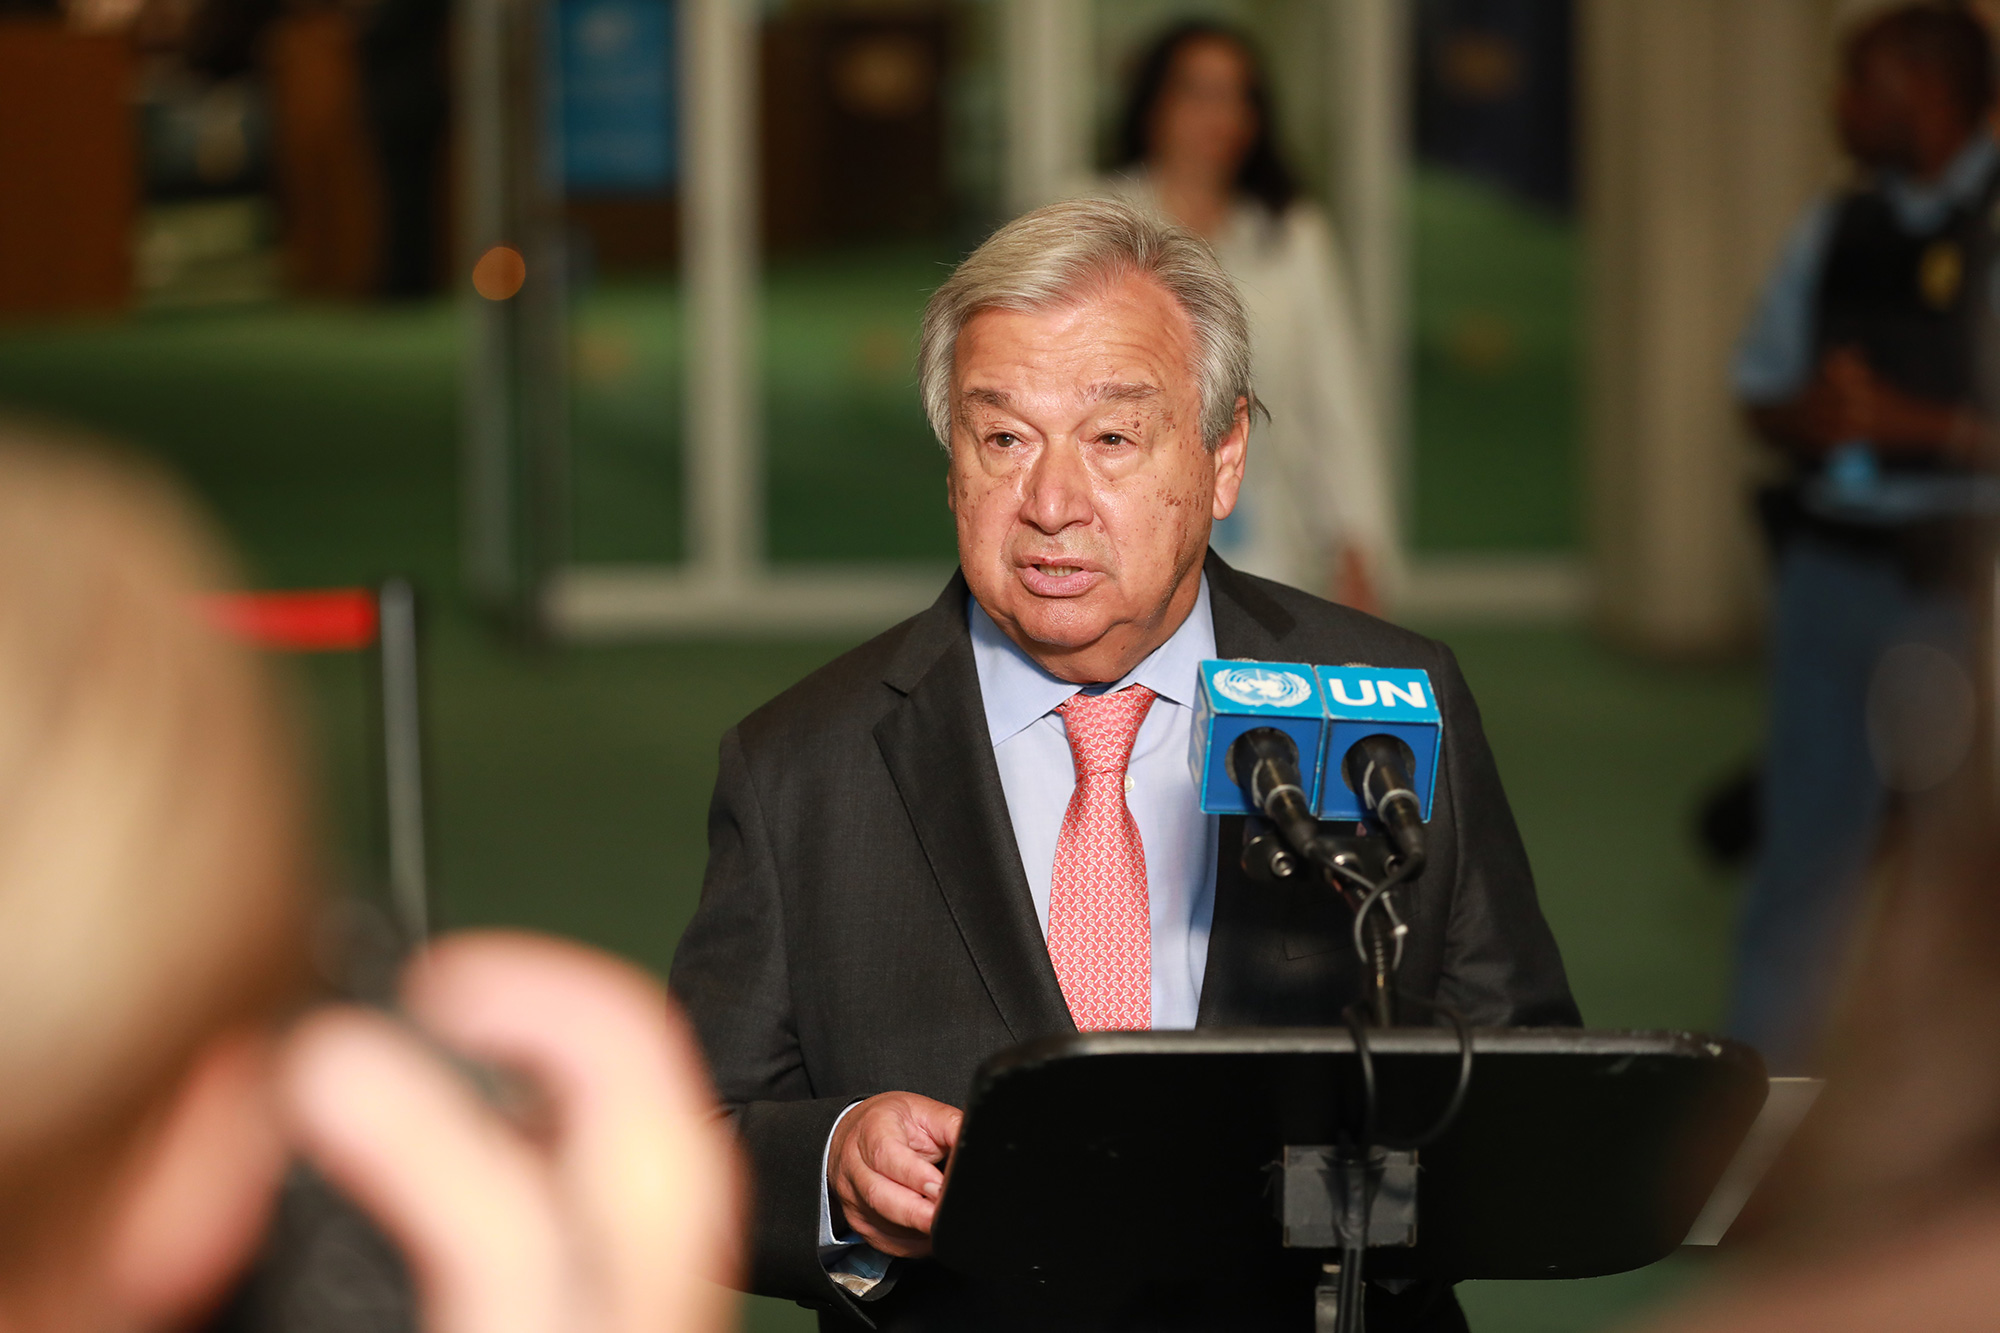 UN Secretary-General Antonio Guterres speaks at the UN headquarters in New York on Monday.